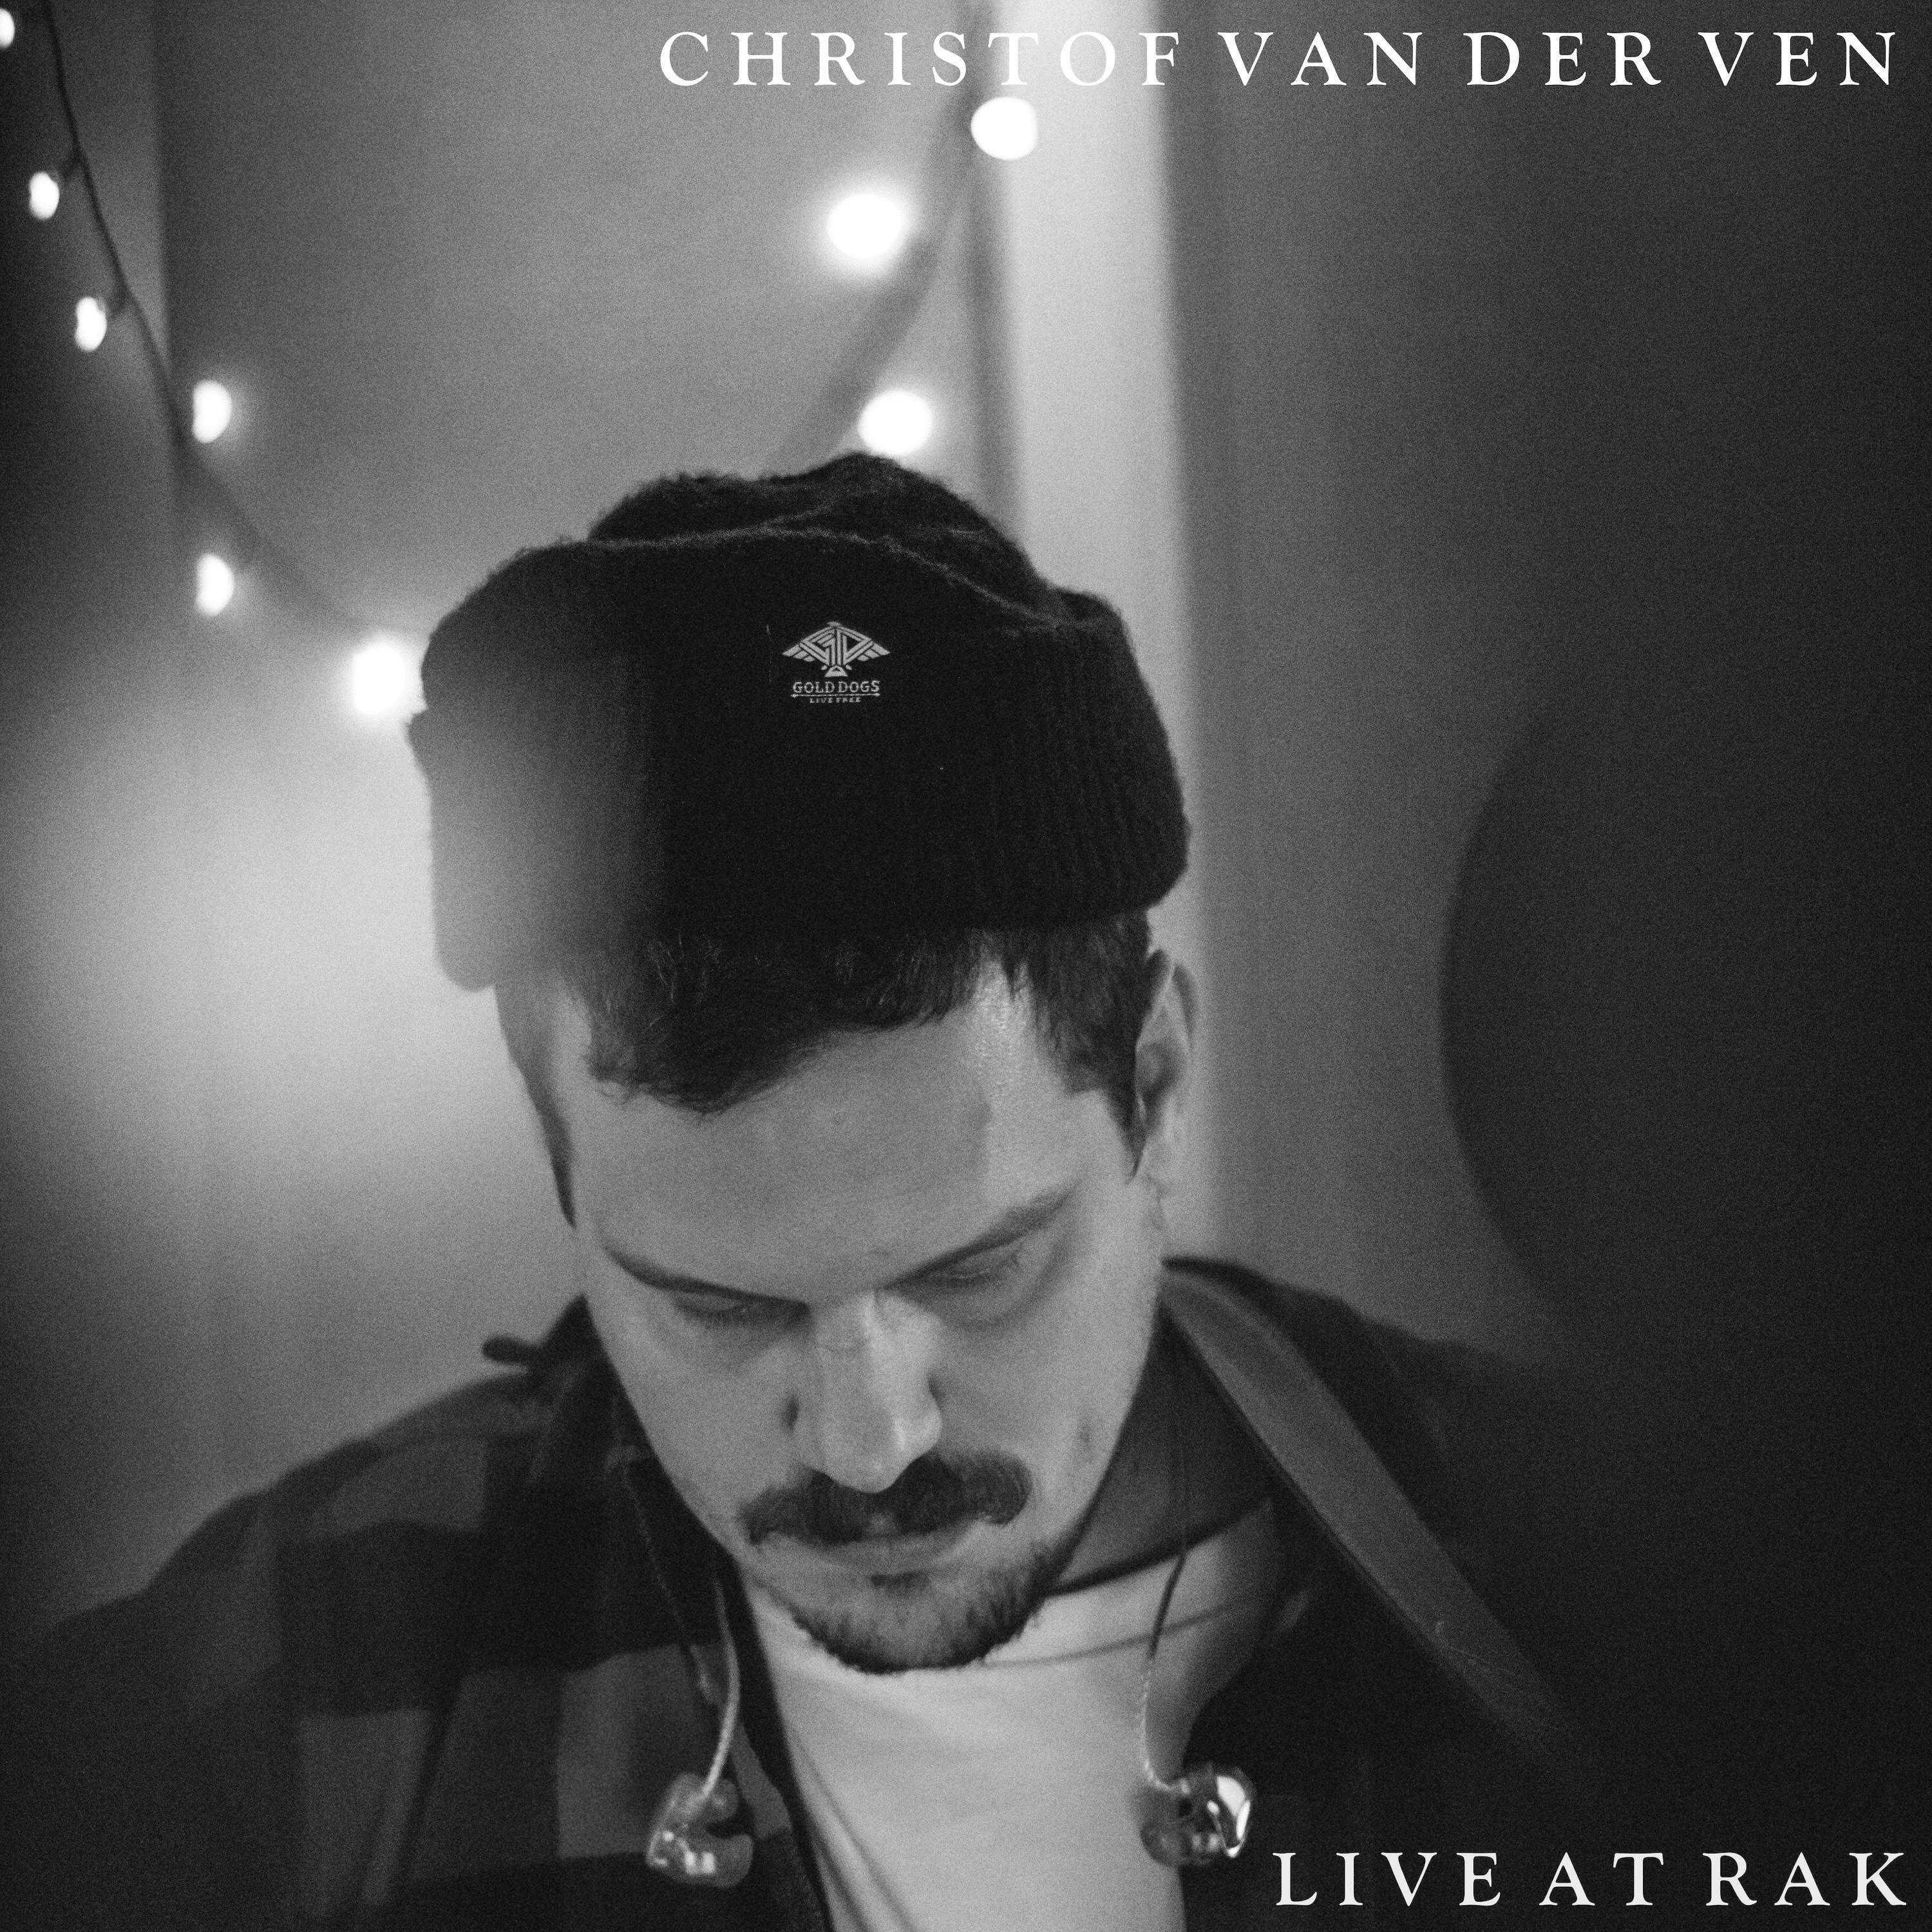 Christof van der Ven - A Darker Light (Live at RAK)